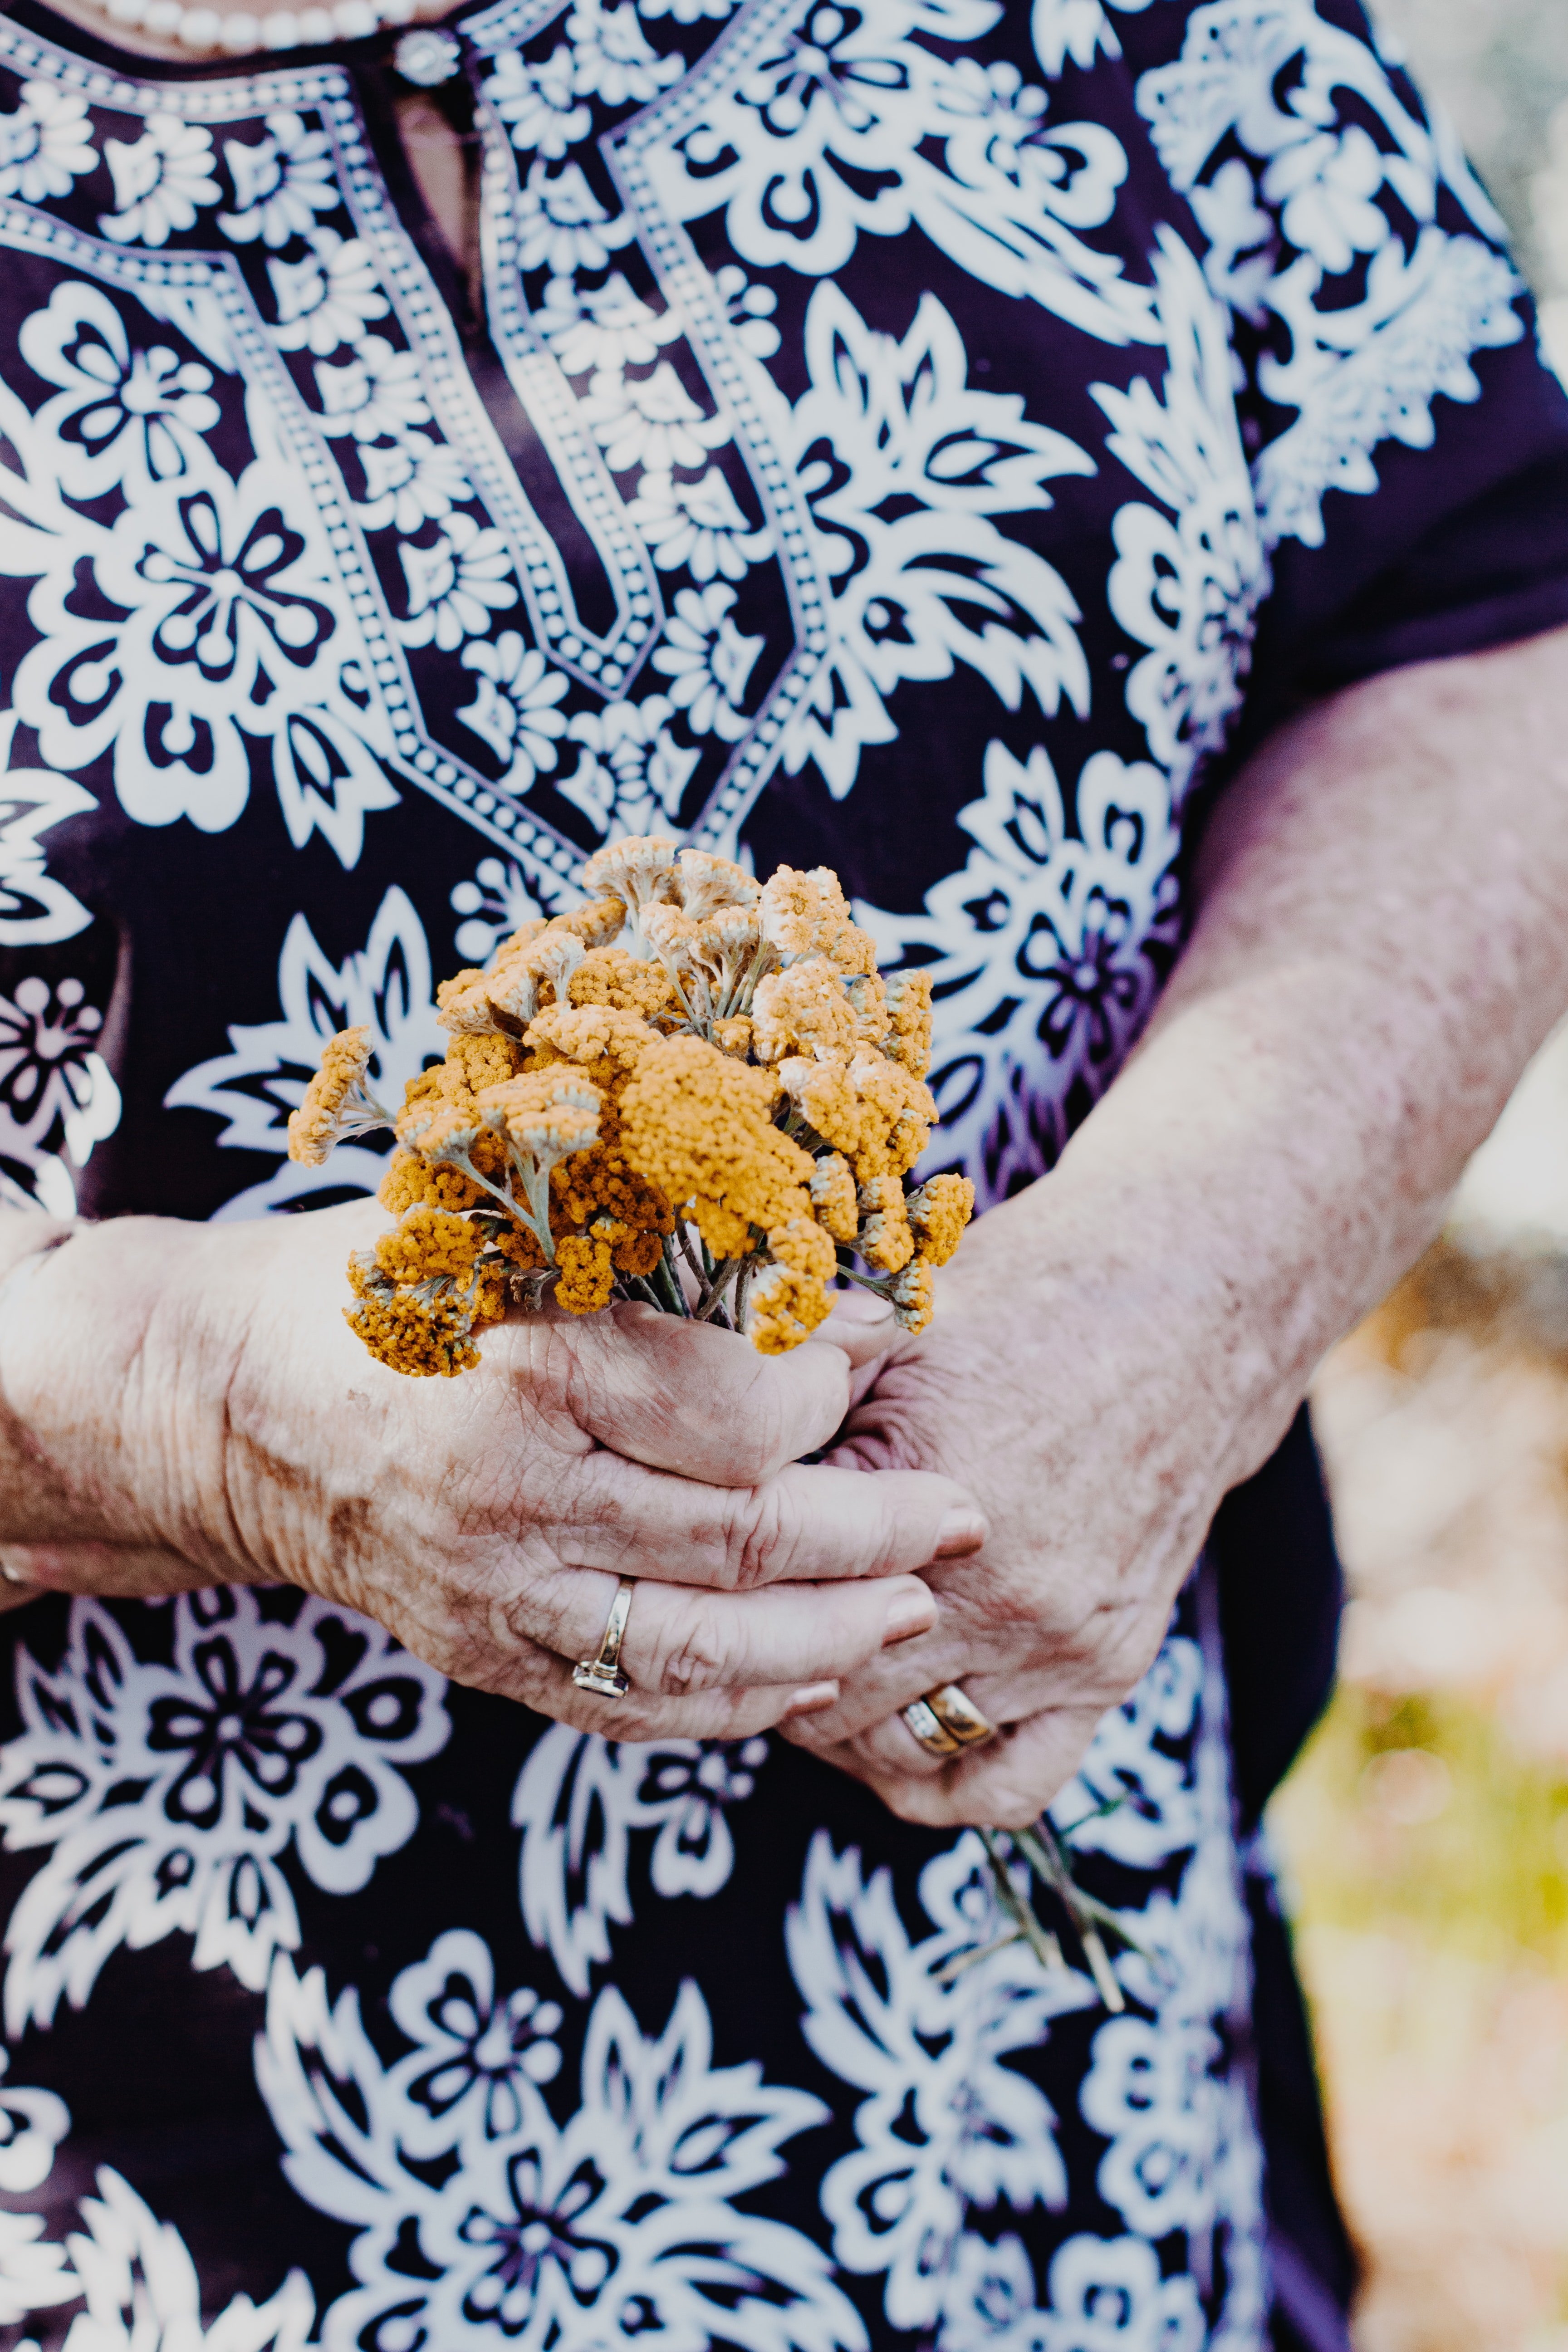 Woman holding flowers | Source: Unsplash